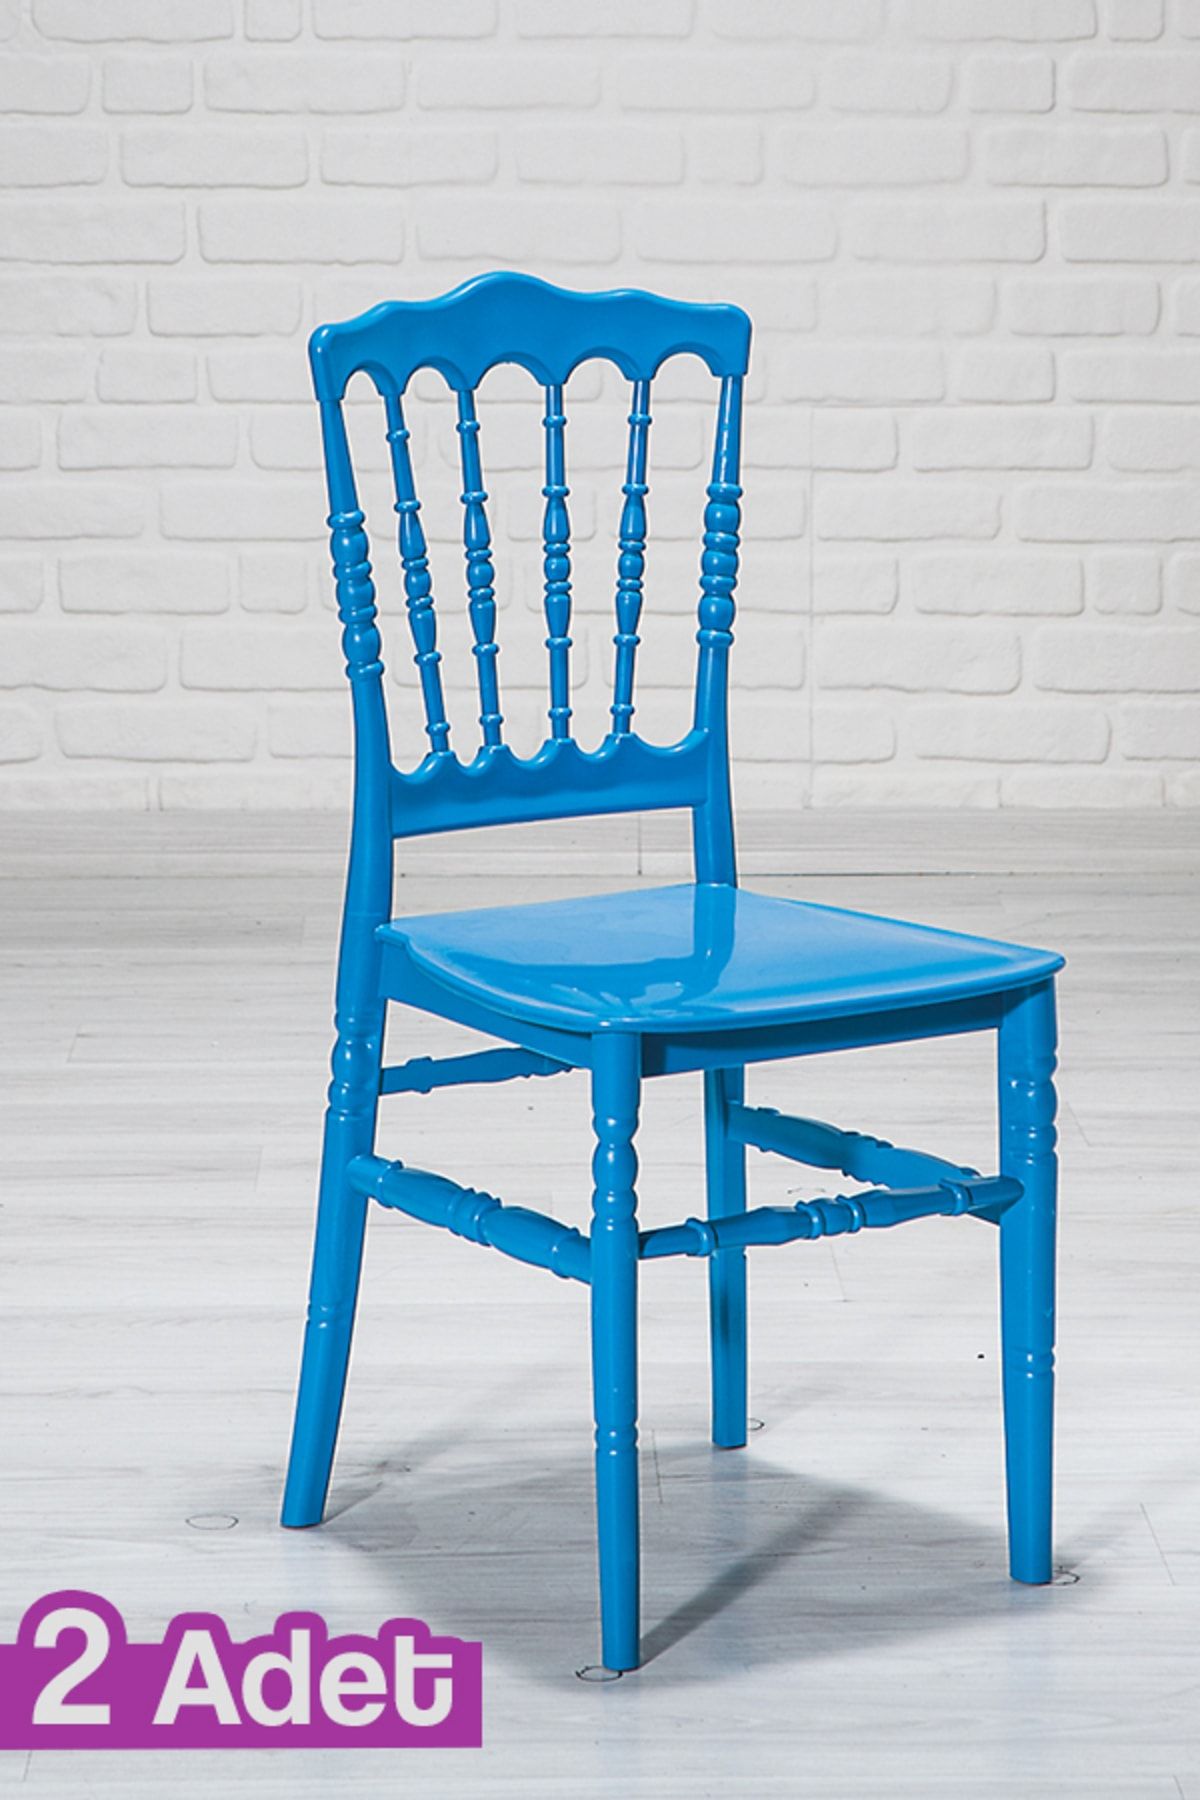 MOBETTO Miray Mutfak Sandalye 2 Adet -mavi